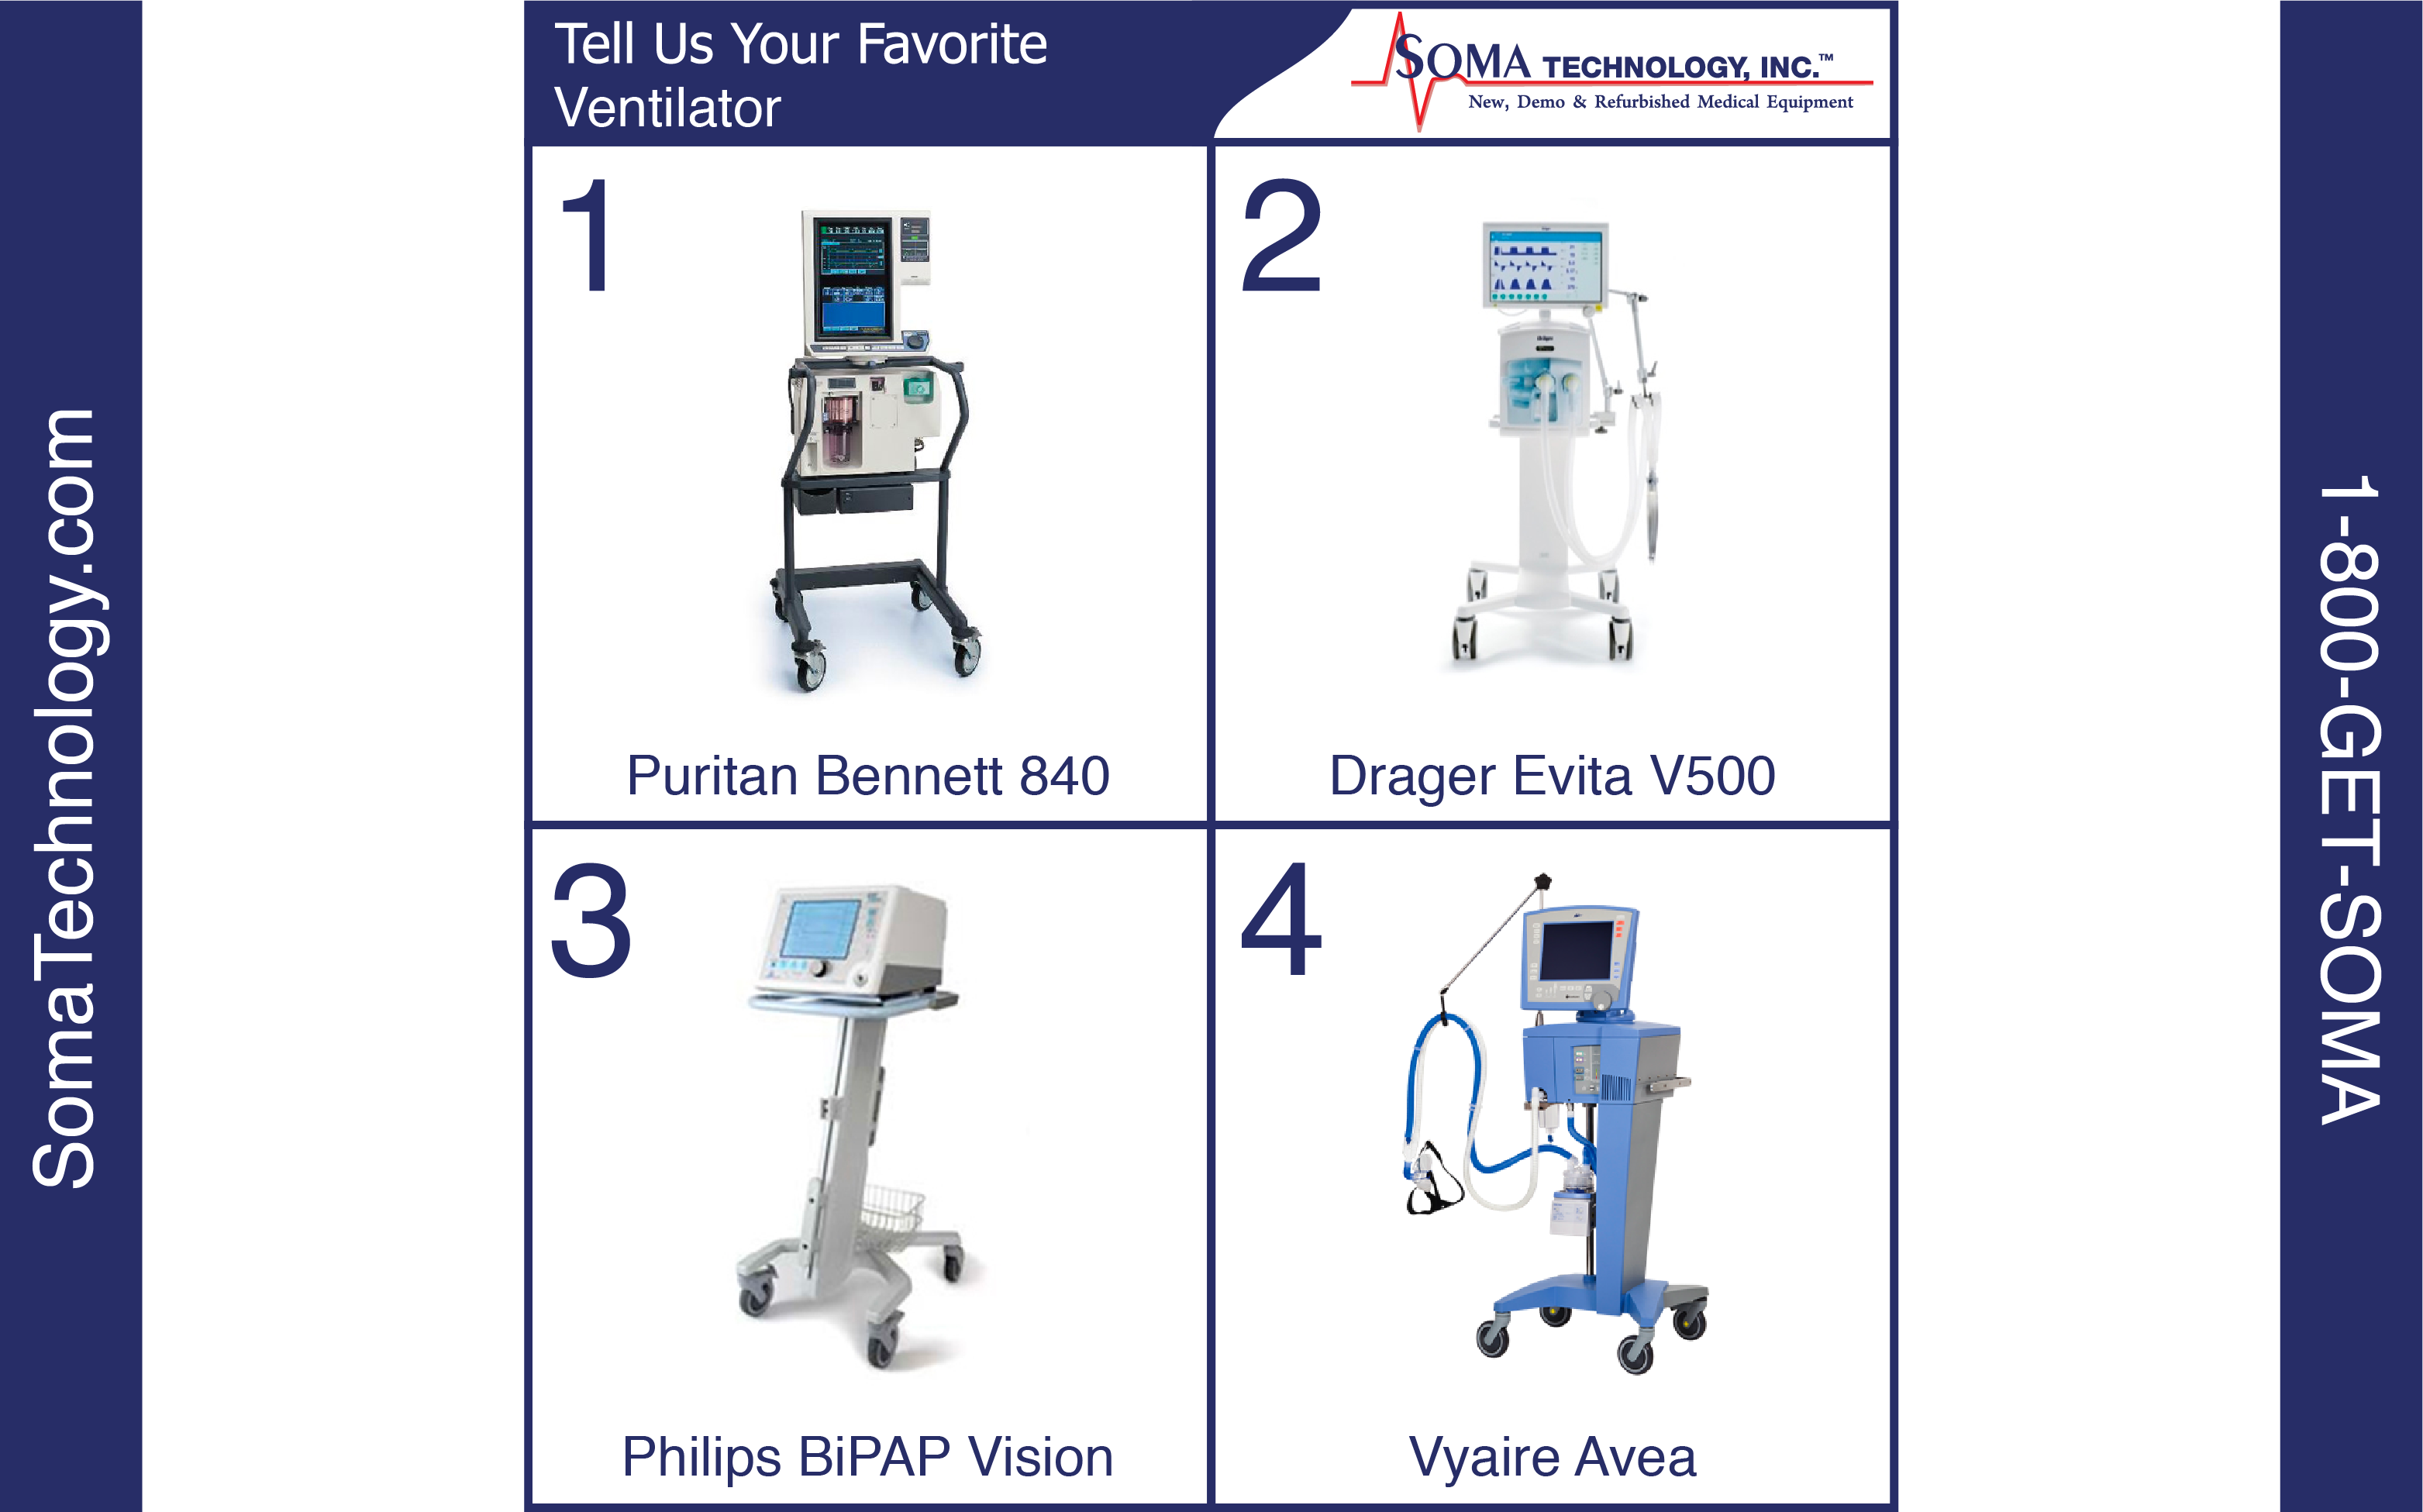 Tell us your favorite ventilator - Soma Technology, Inc.